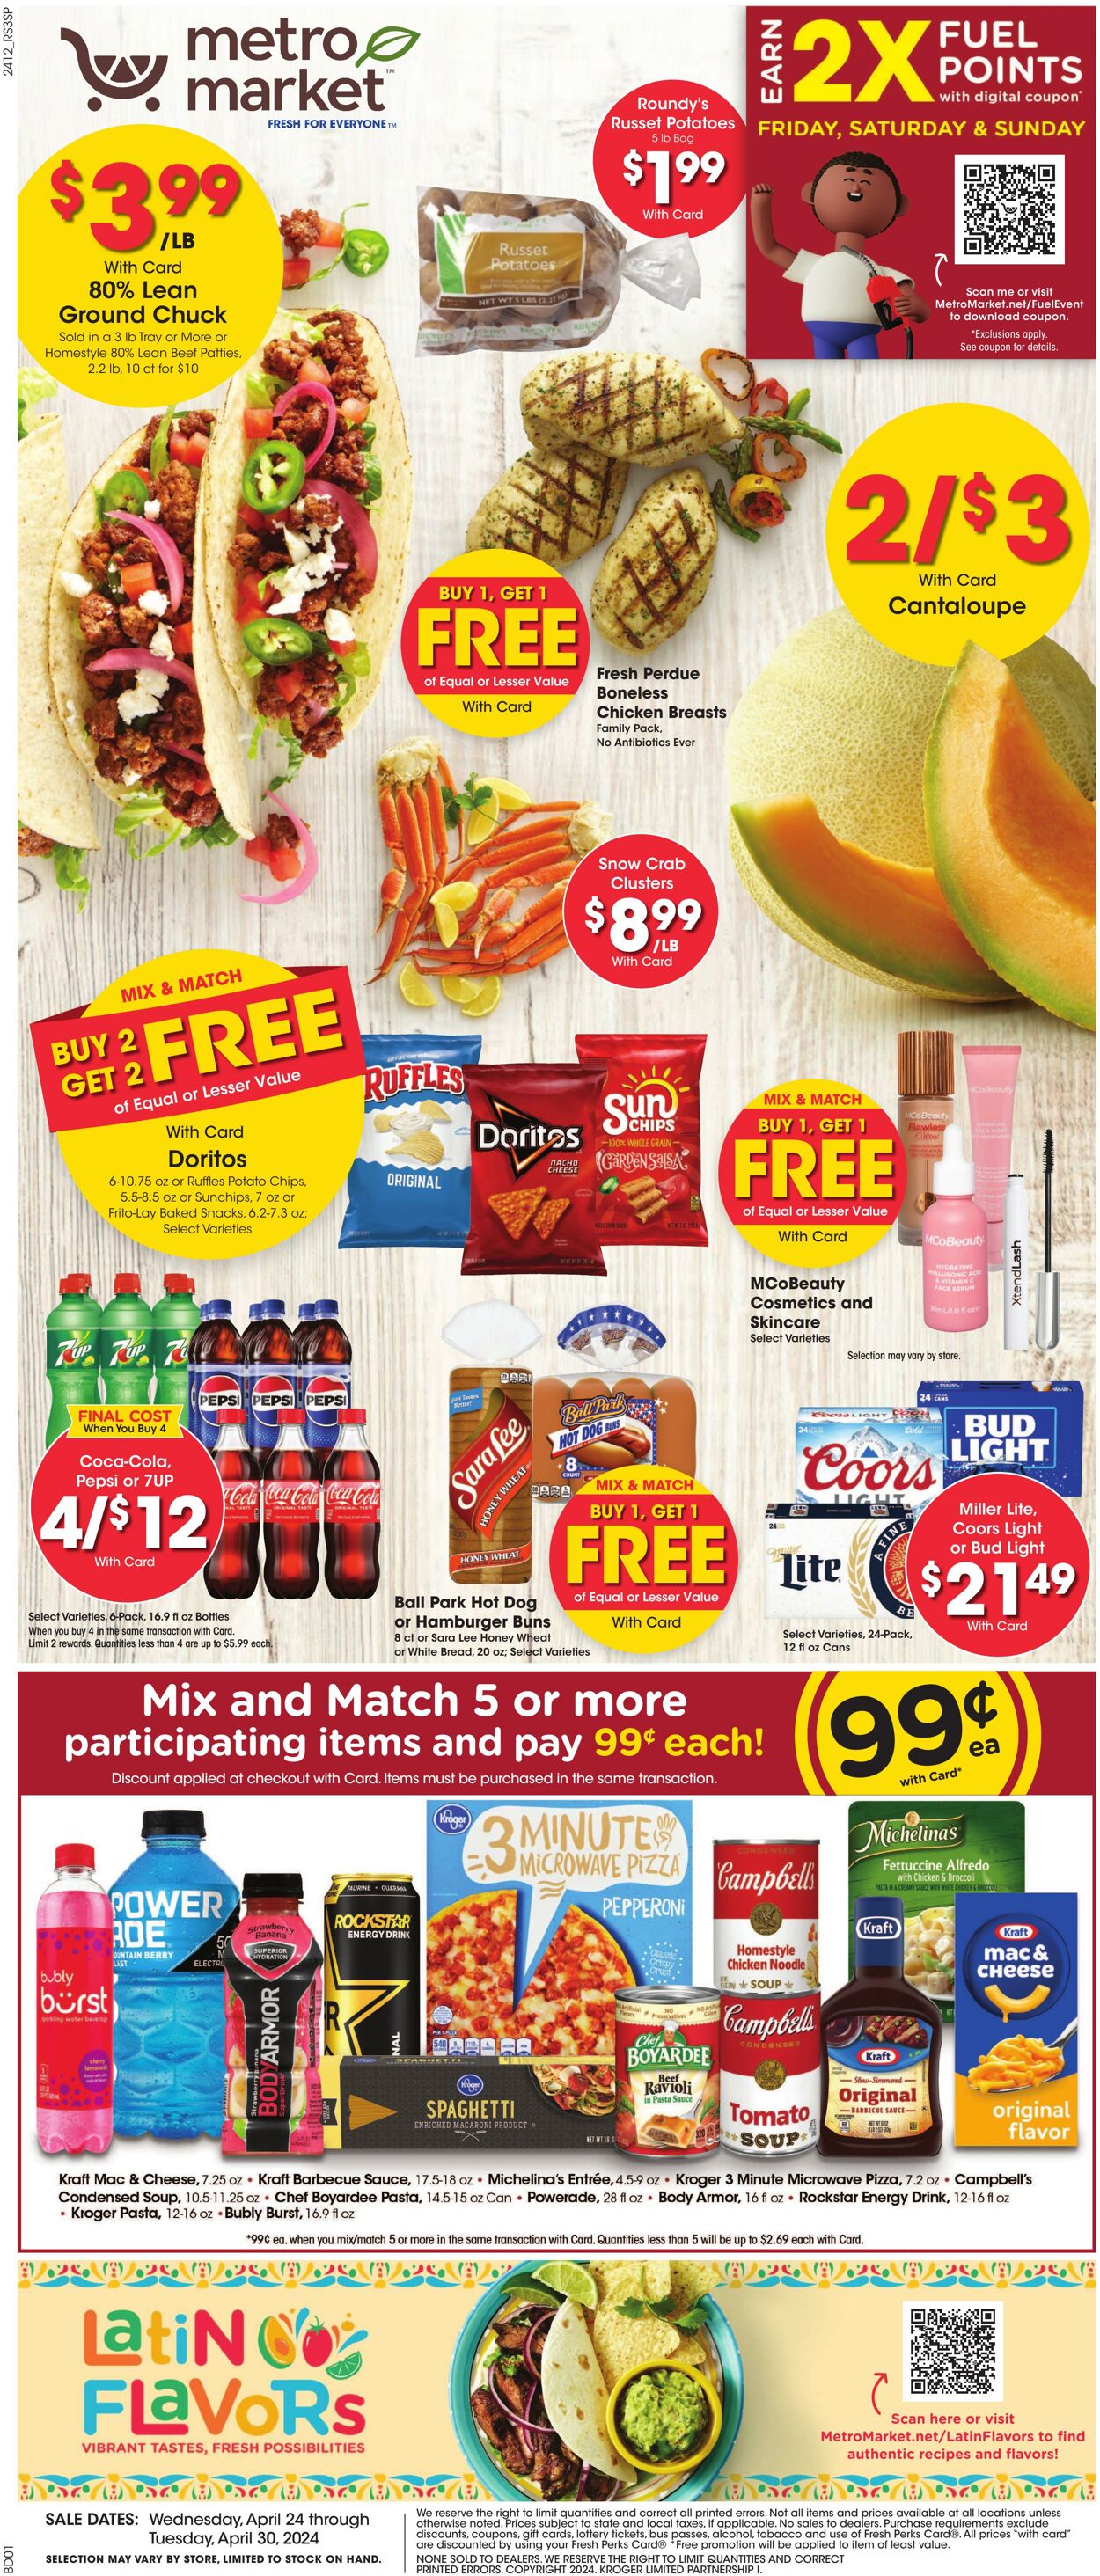 Metro Market Promotional weekly ads